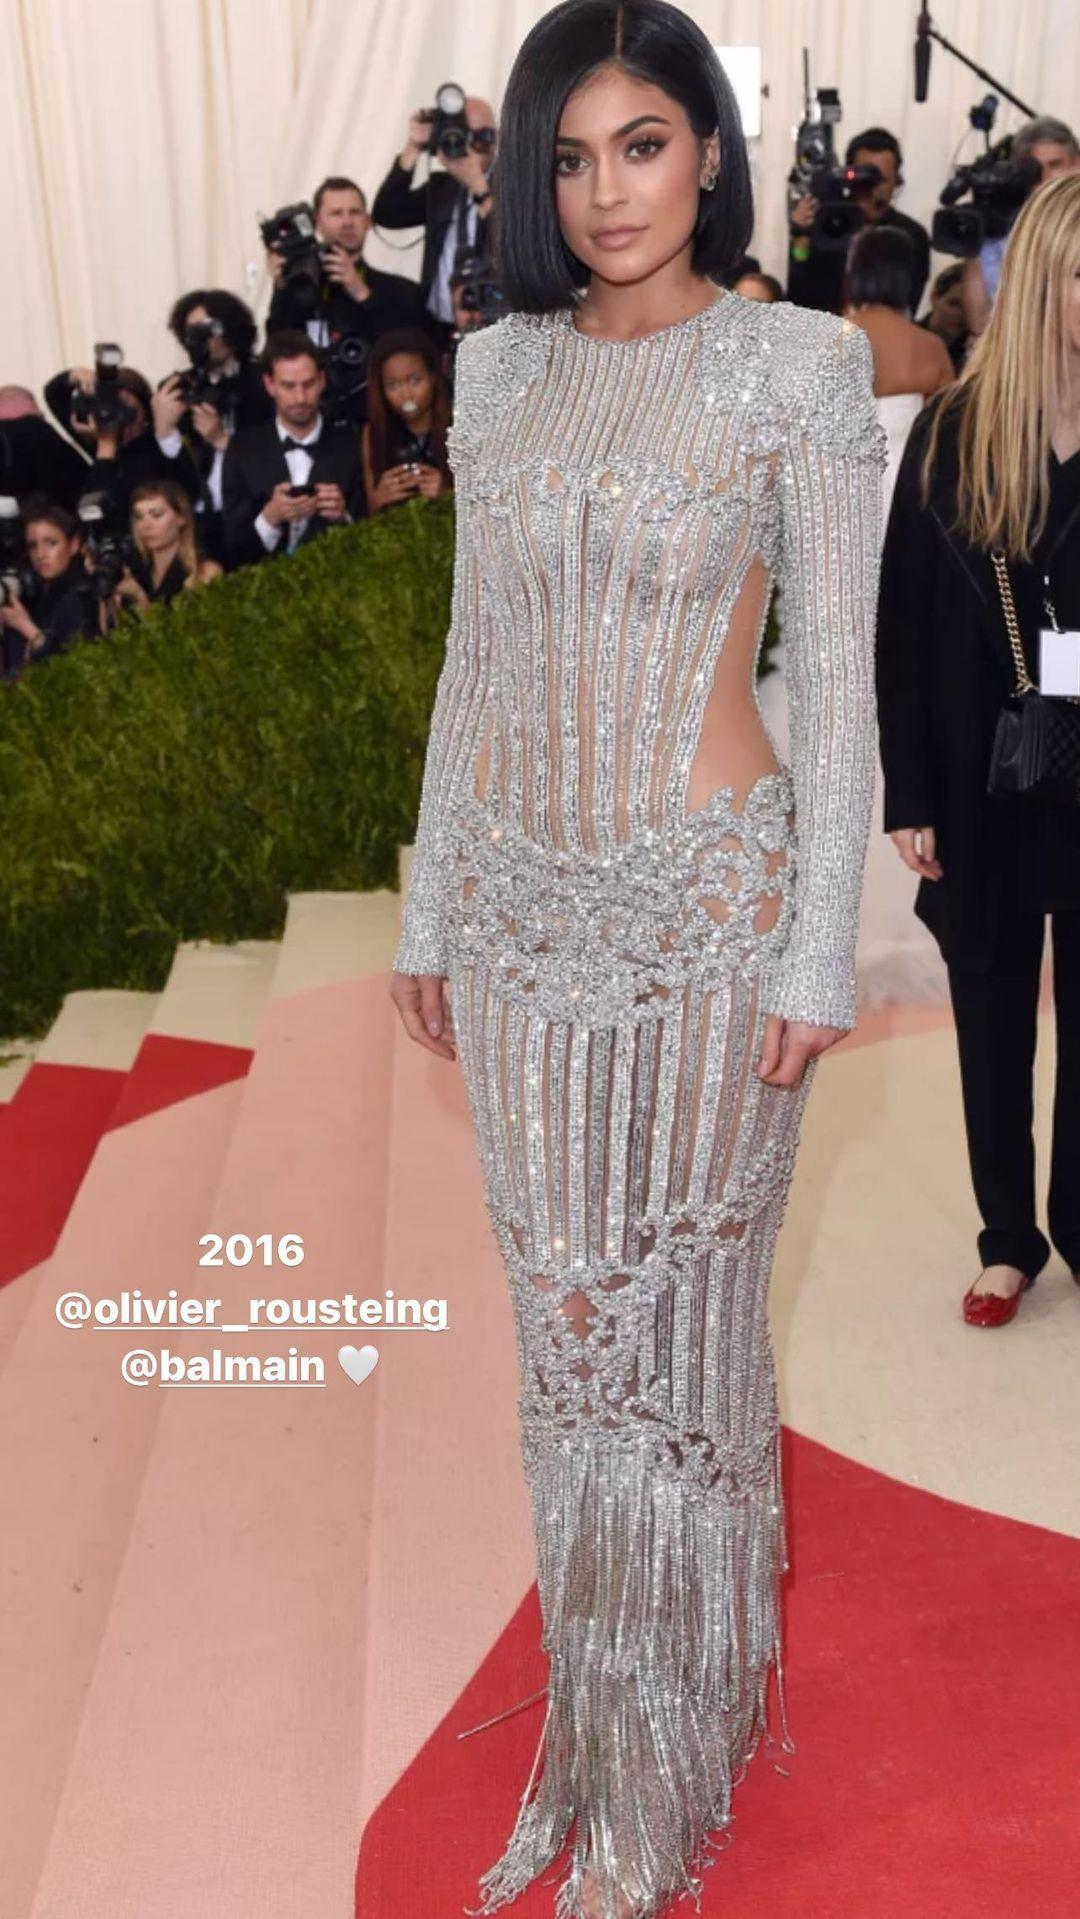 Kylie Jenner t the 2016 Met Gala